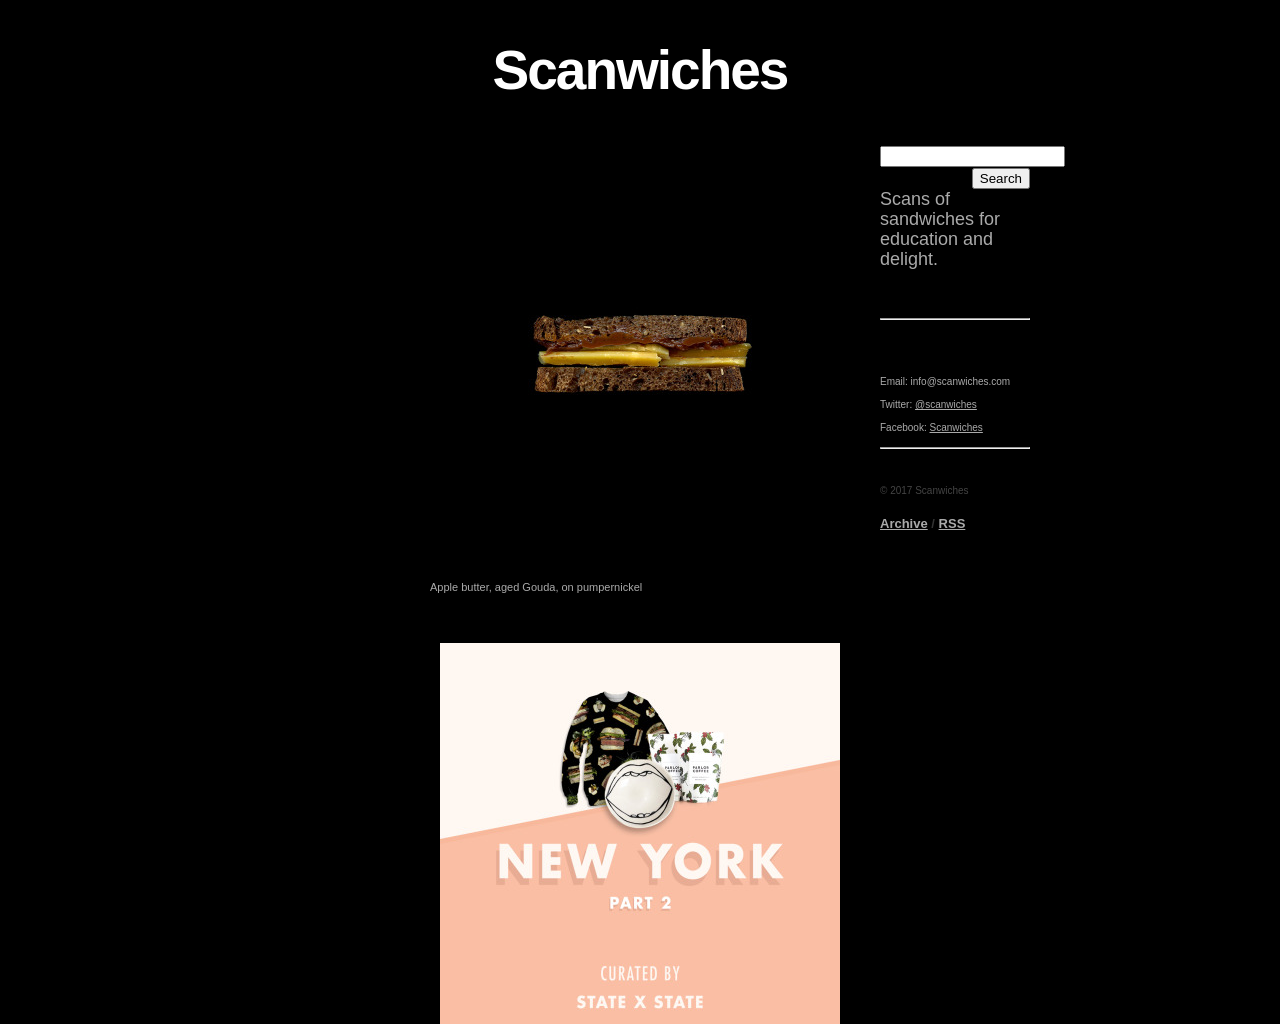 scanwiches.com